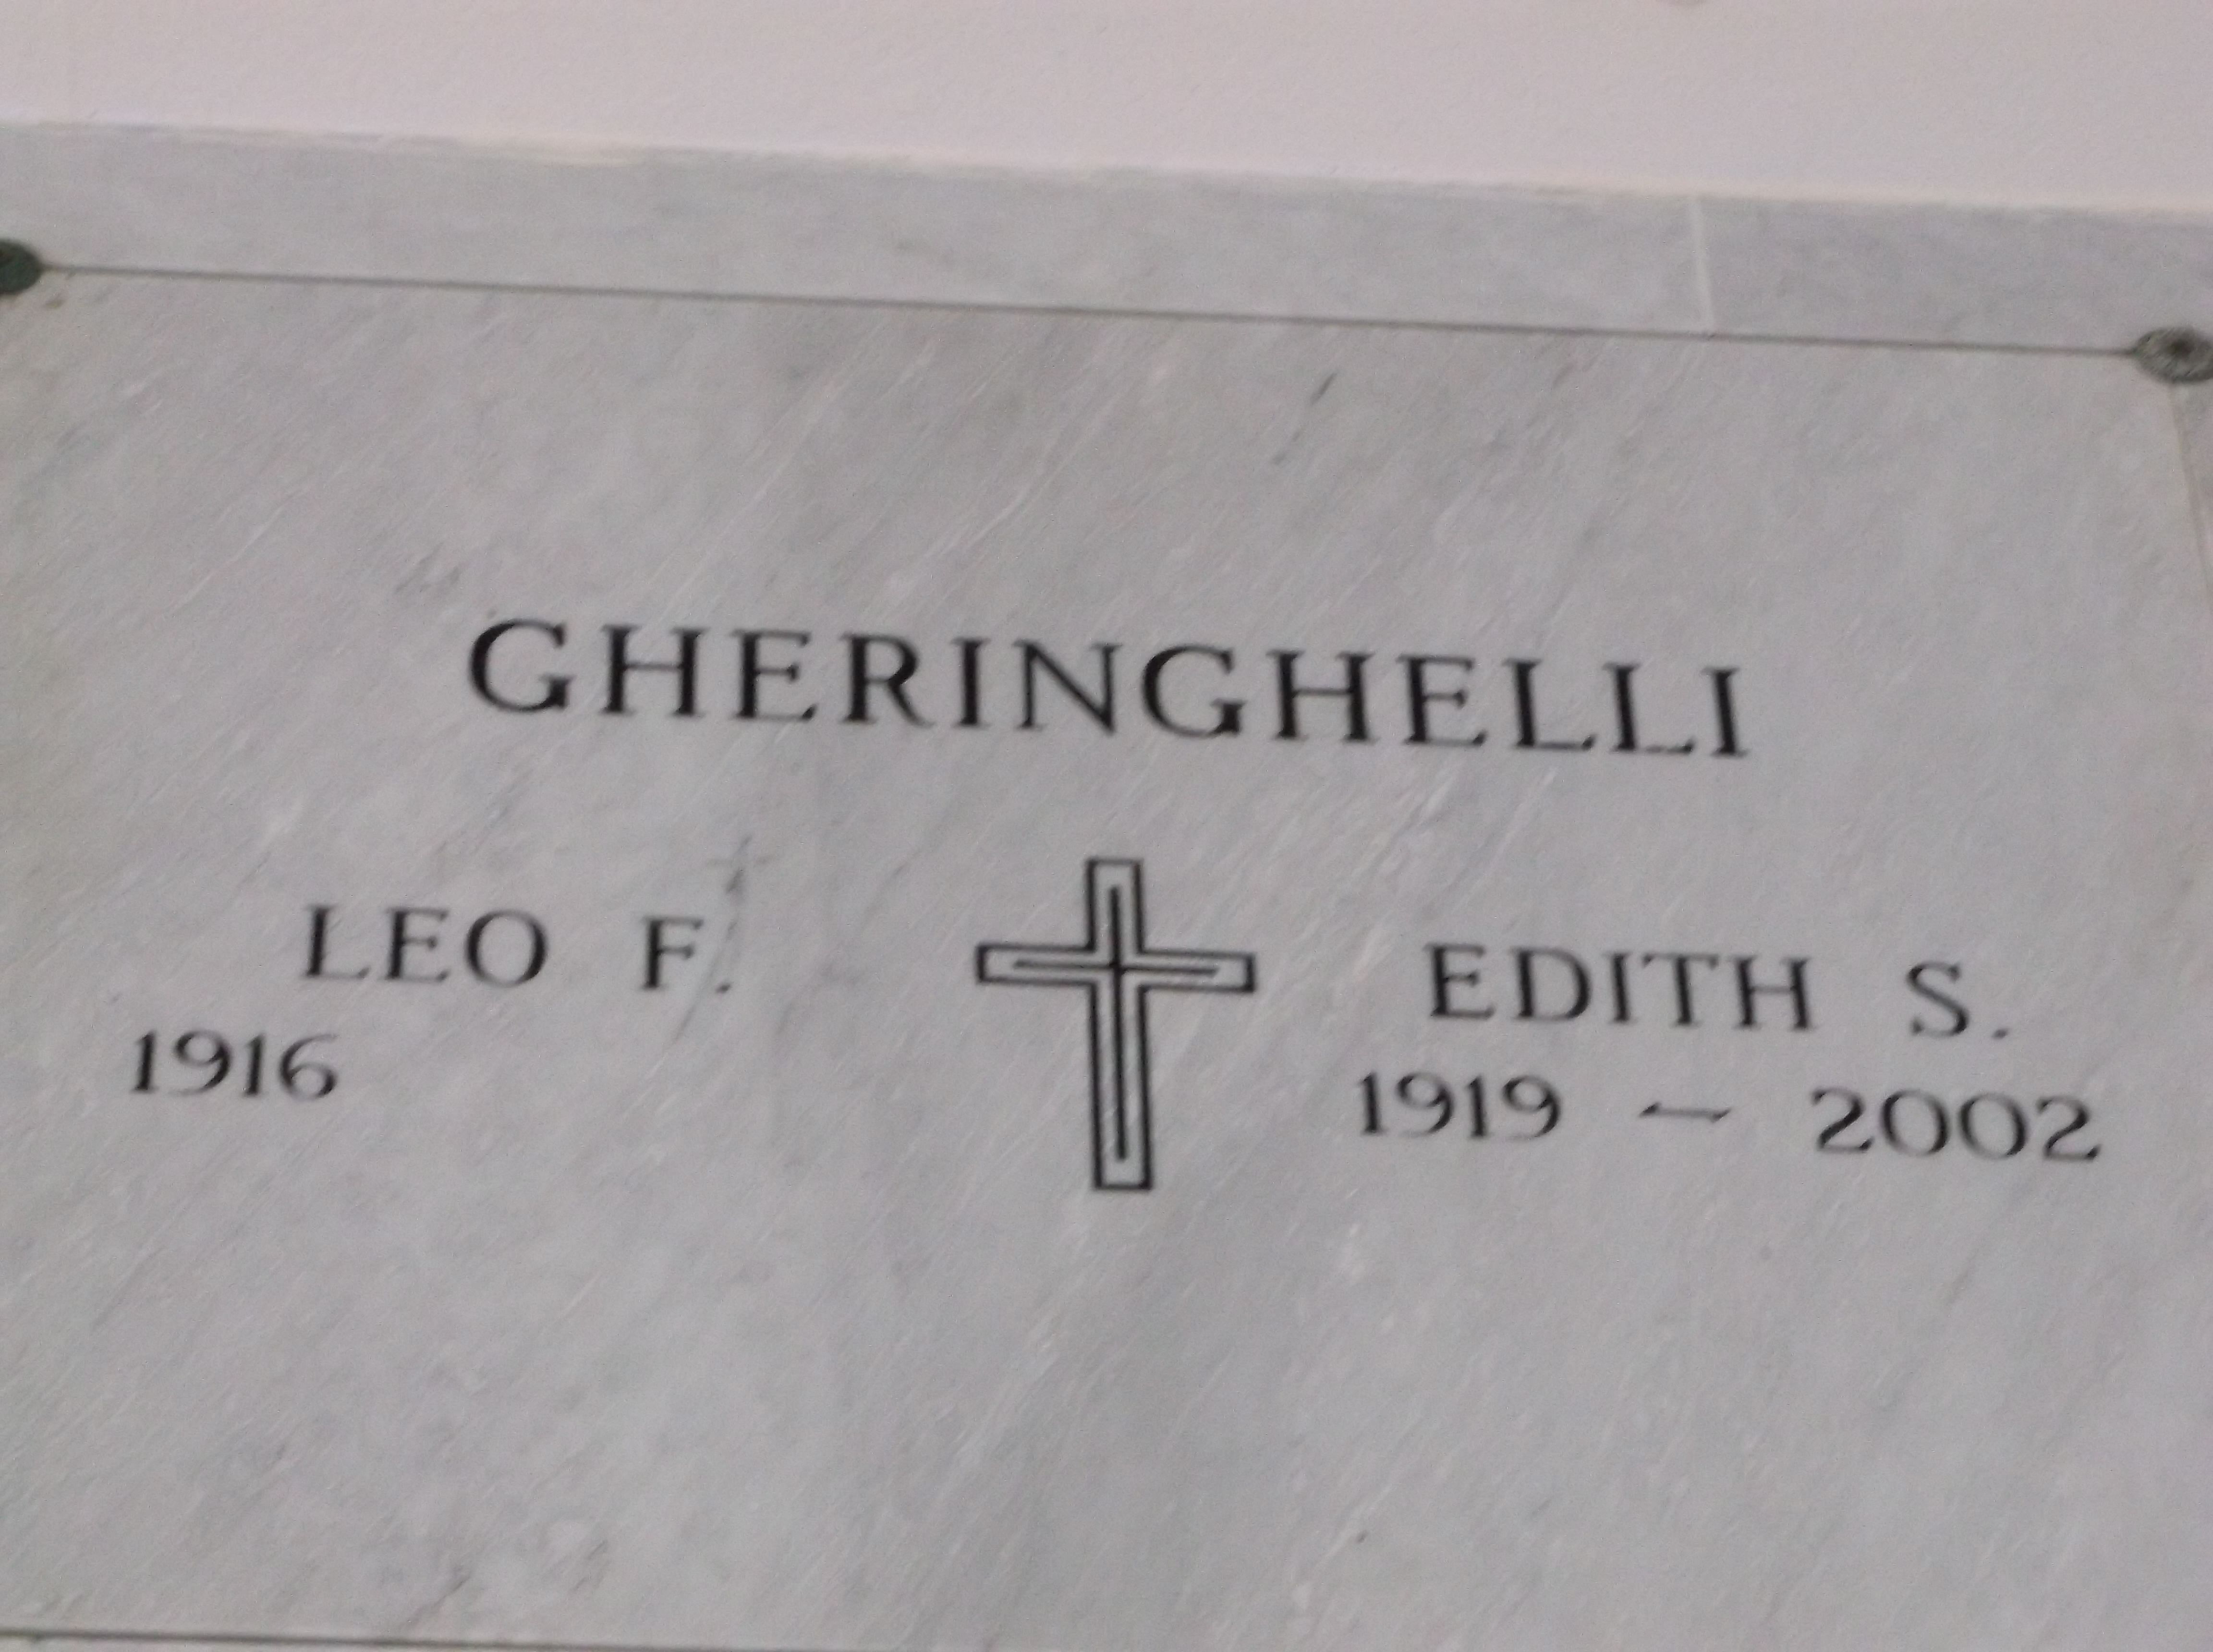 Leo F Gheringhelli